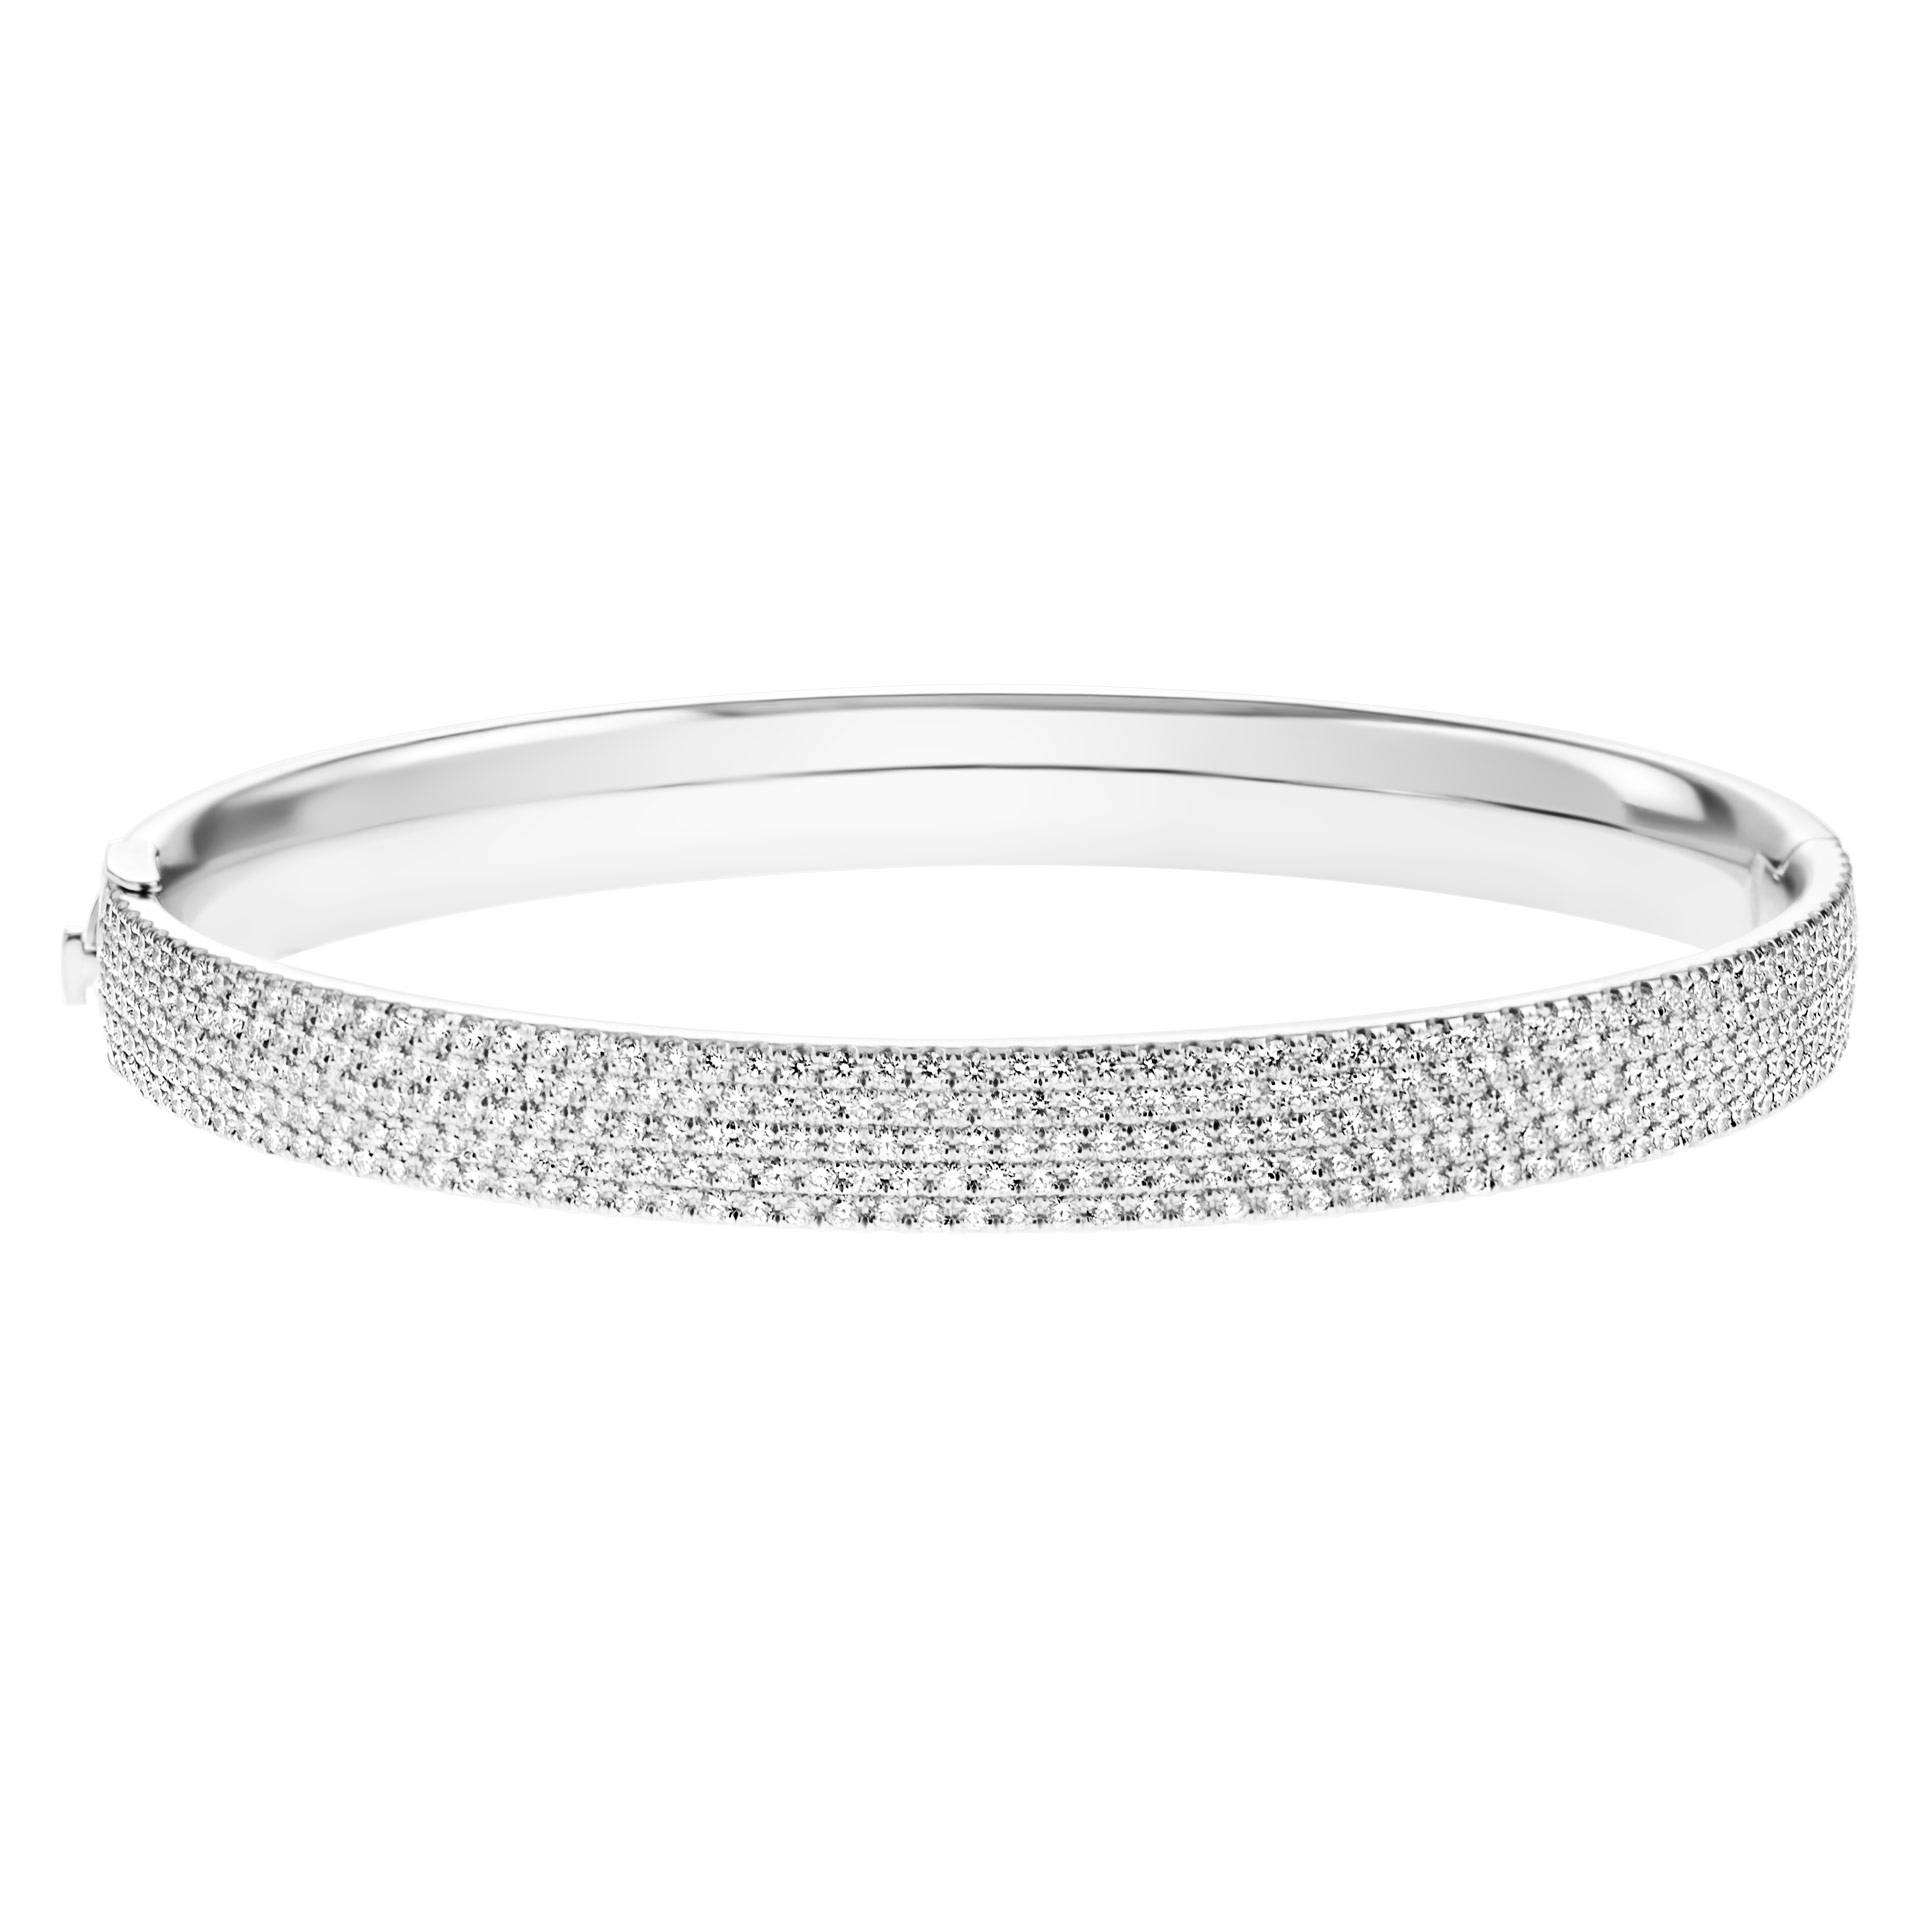 Tiffany & Co Metro diamond bangle in 18k white gold image 1